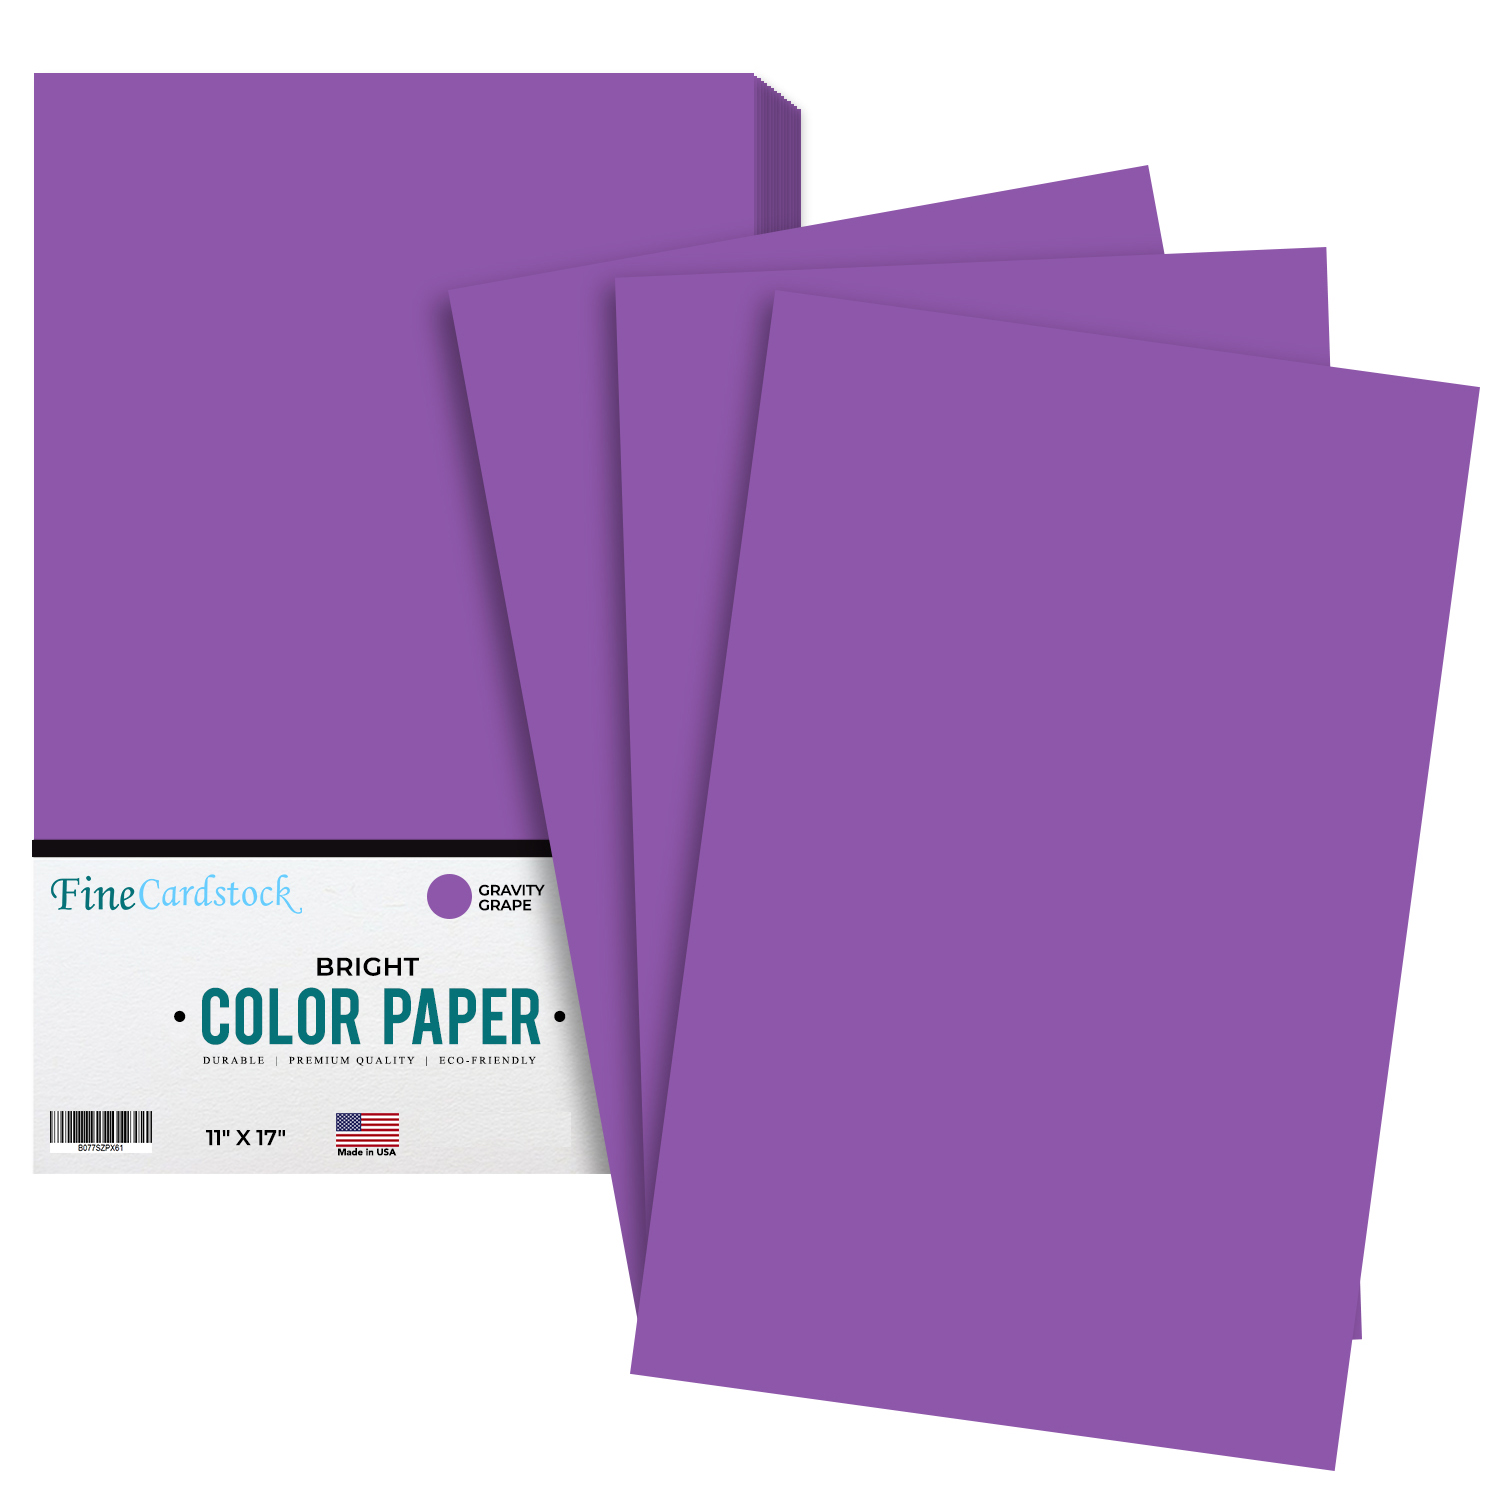 11 x 17 Color Paper Gravity Grape - Bulk and Wholesale - Fine Cardstock